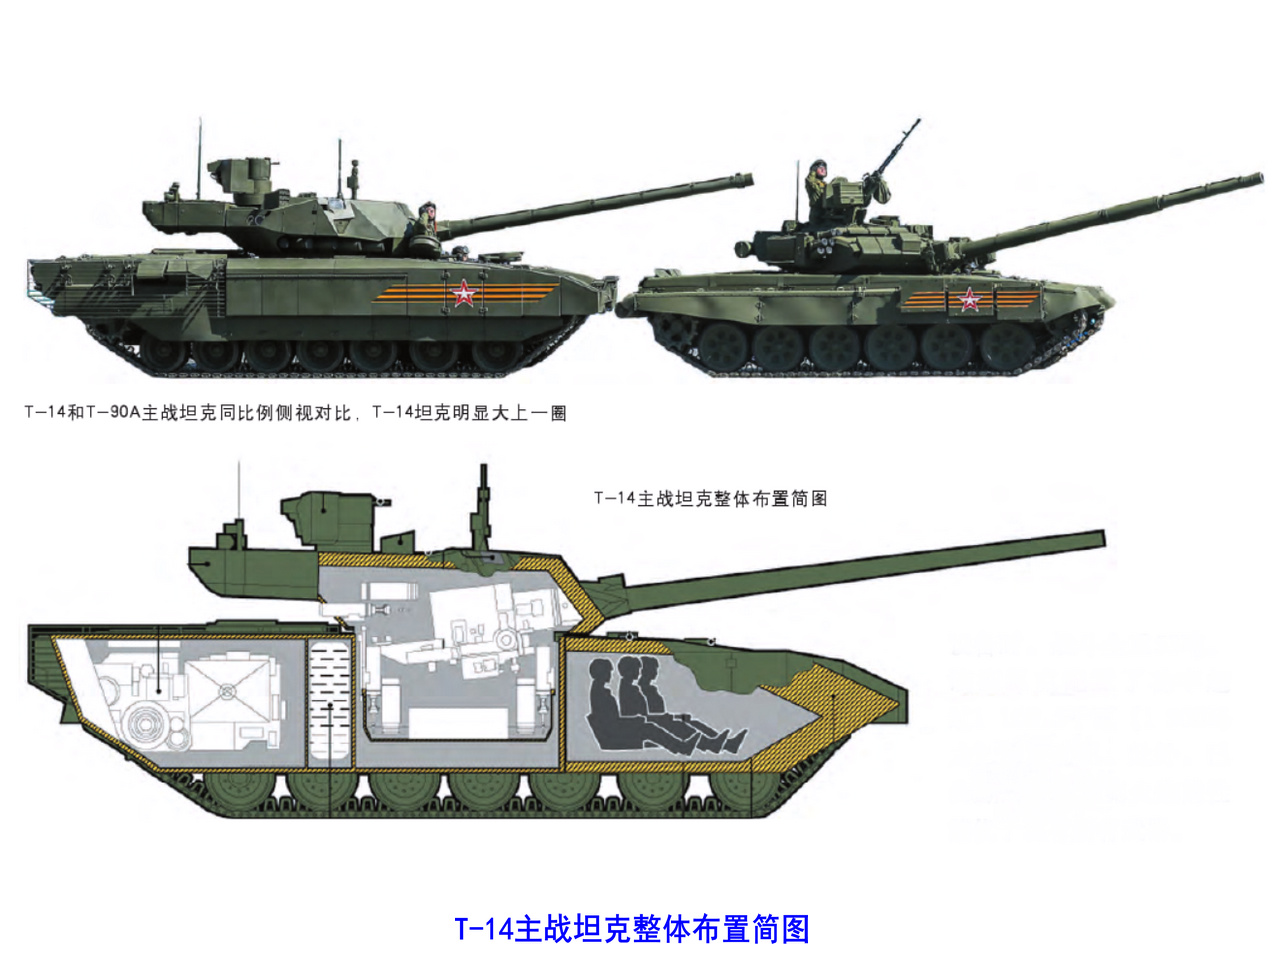 T-14主戰坦克整體布置圖